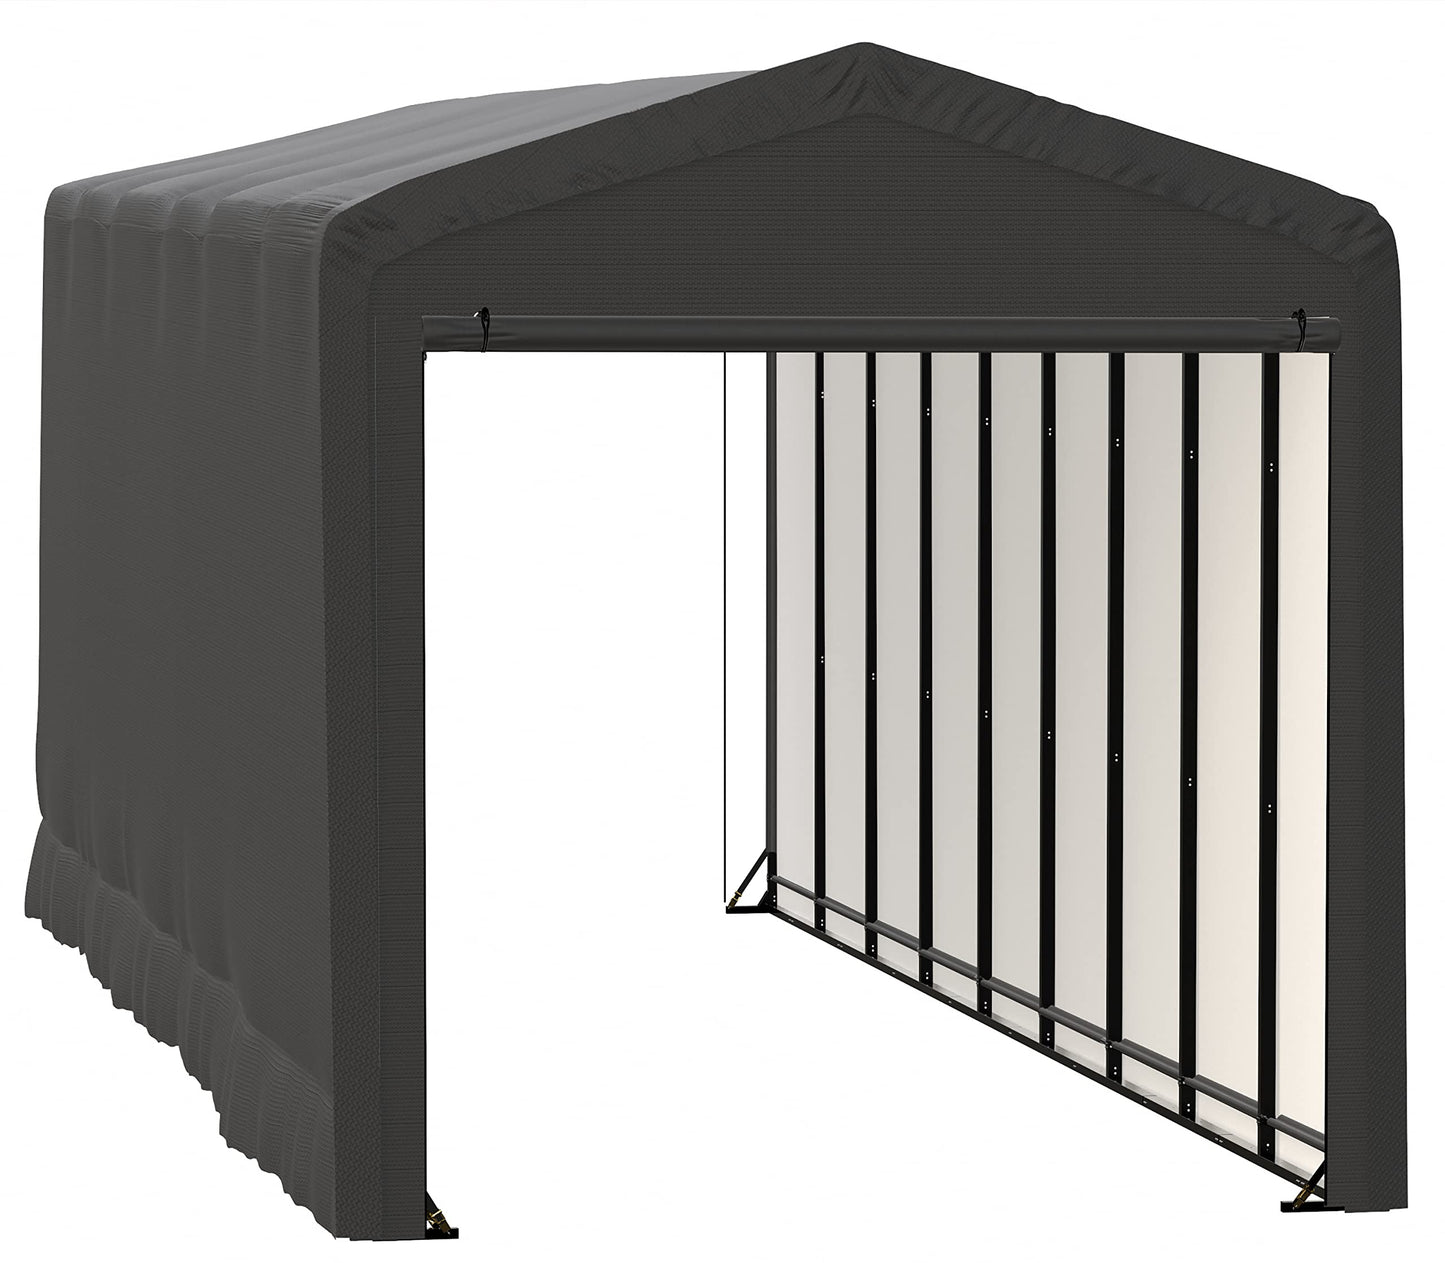 ShelterLogic ShelterTube Garage & Storage Shelter, 14' x 40' x 16' Heavy-Duty Steel Frame Wind and Snow-Load Rated Enclosure, Gray 14' x 40' x 16'